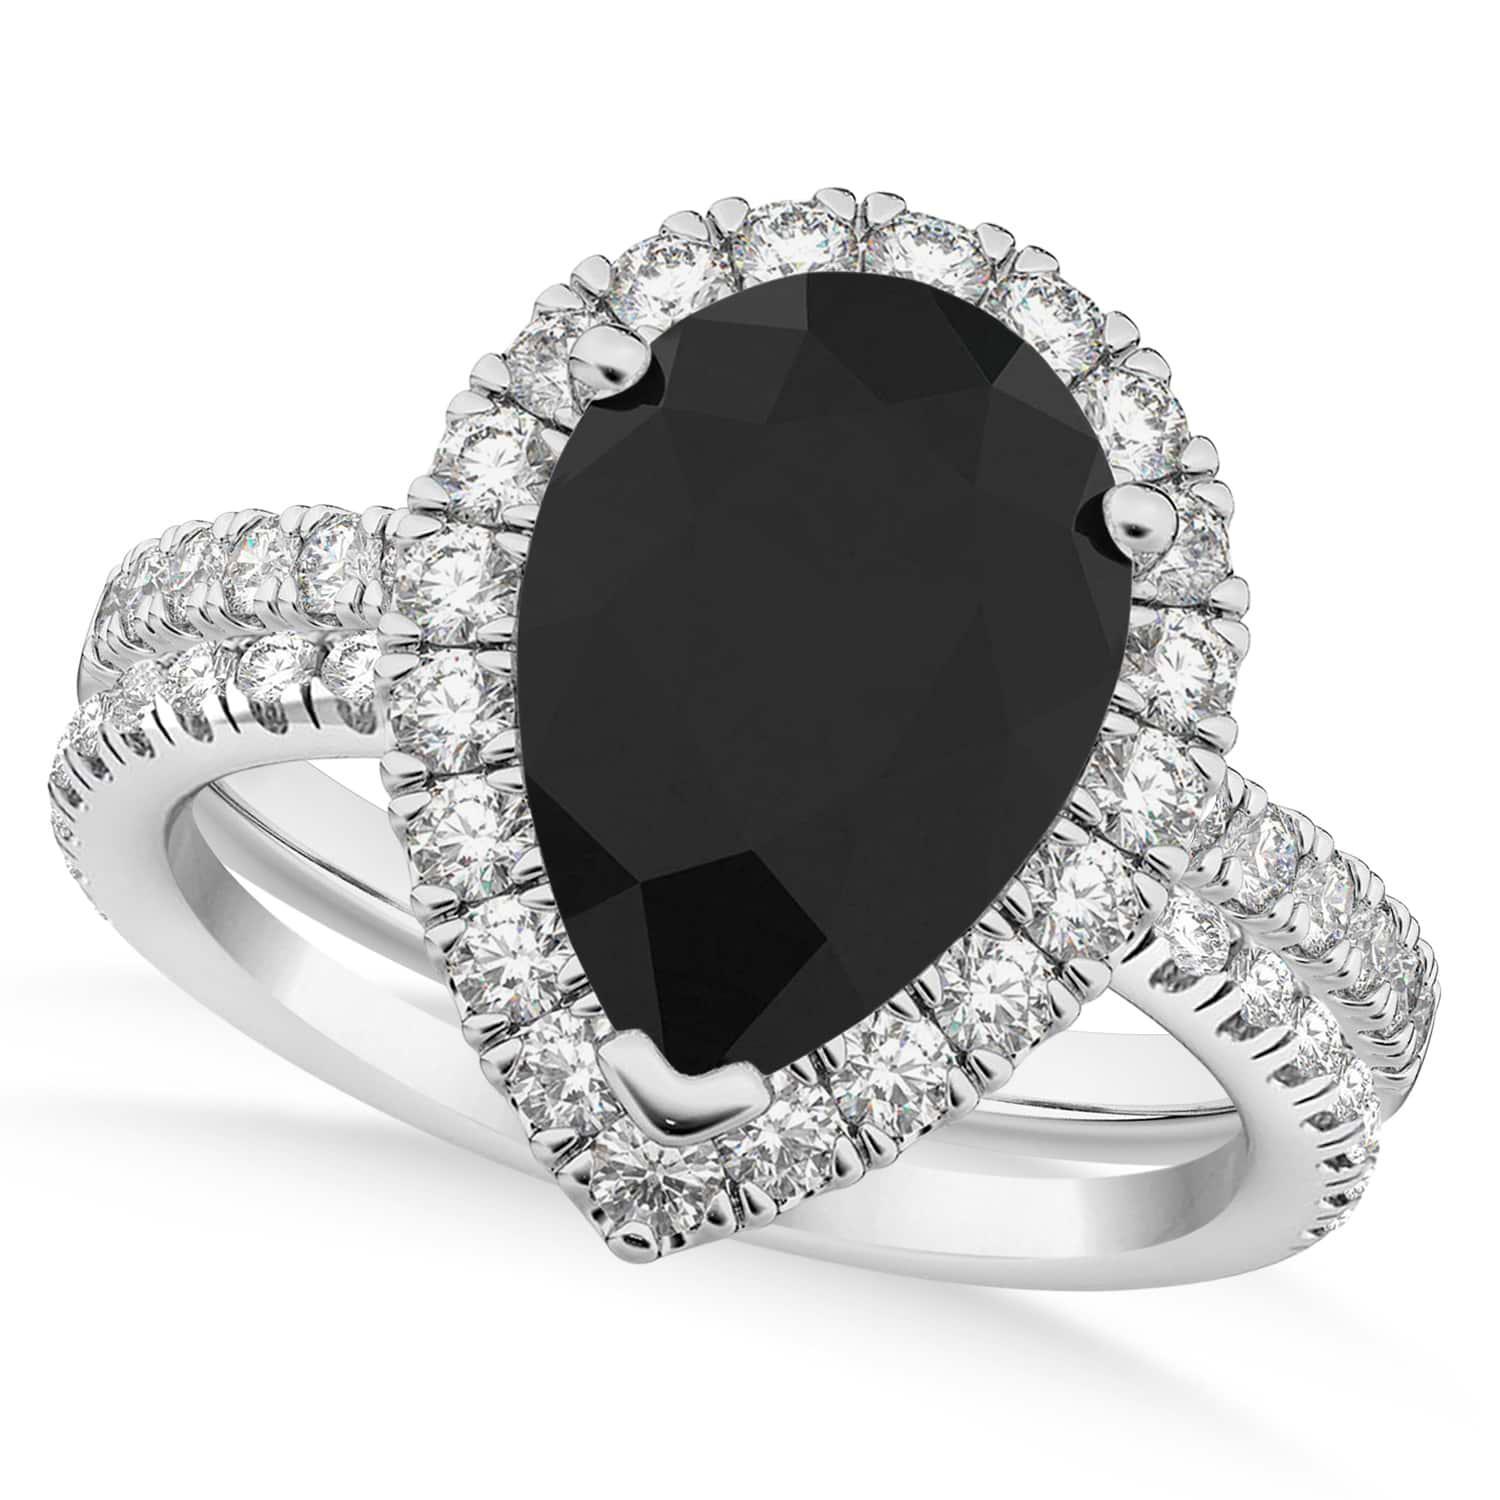 Black Diamond & Diamonds Pear-Cut Halo Bridal Set 14K White Gold (2.78ct)